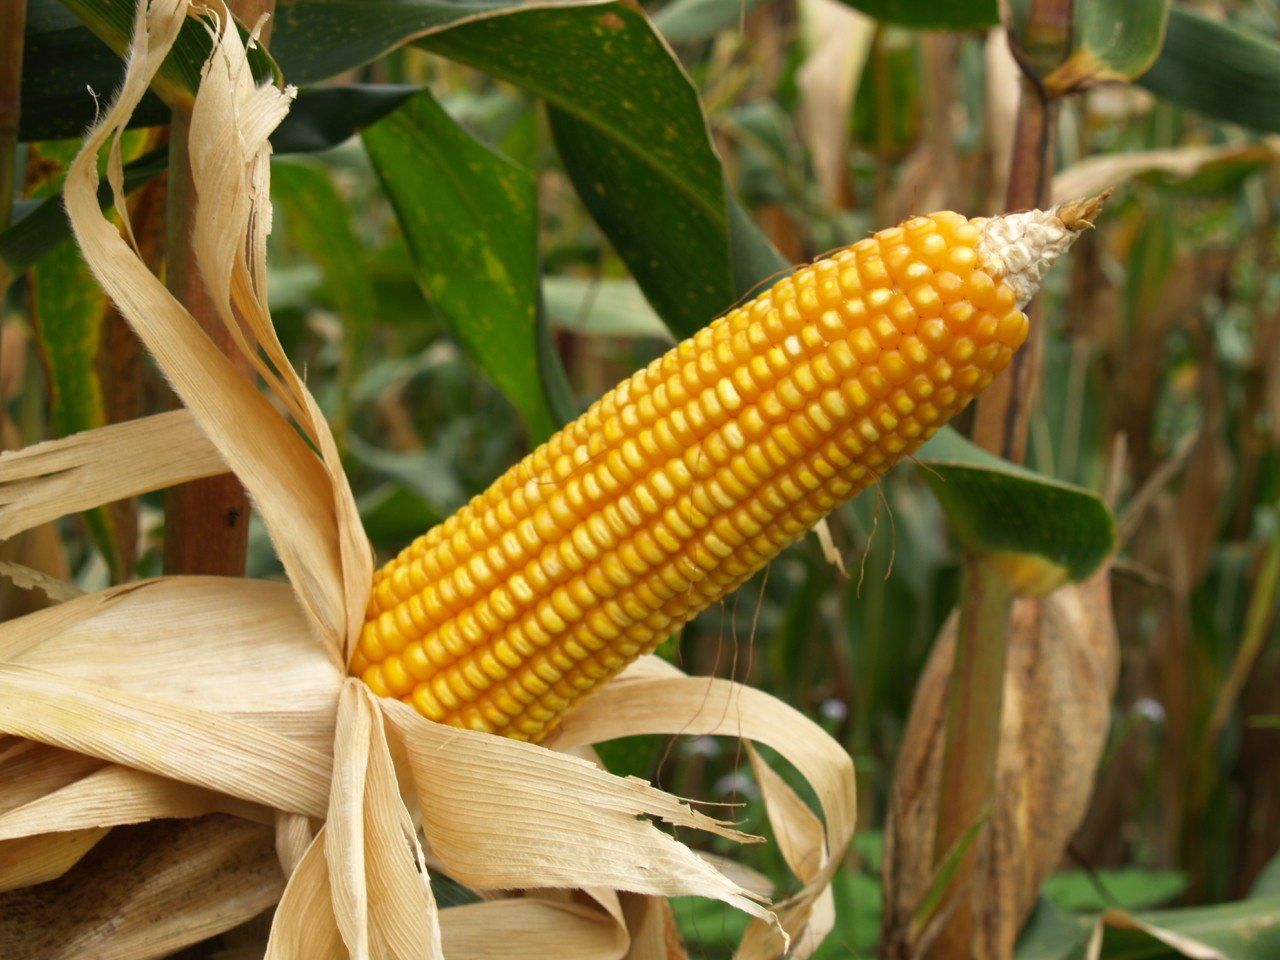 Tlalpan libre de maíz transgénico: UNAM